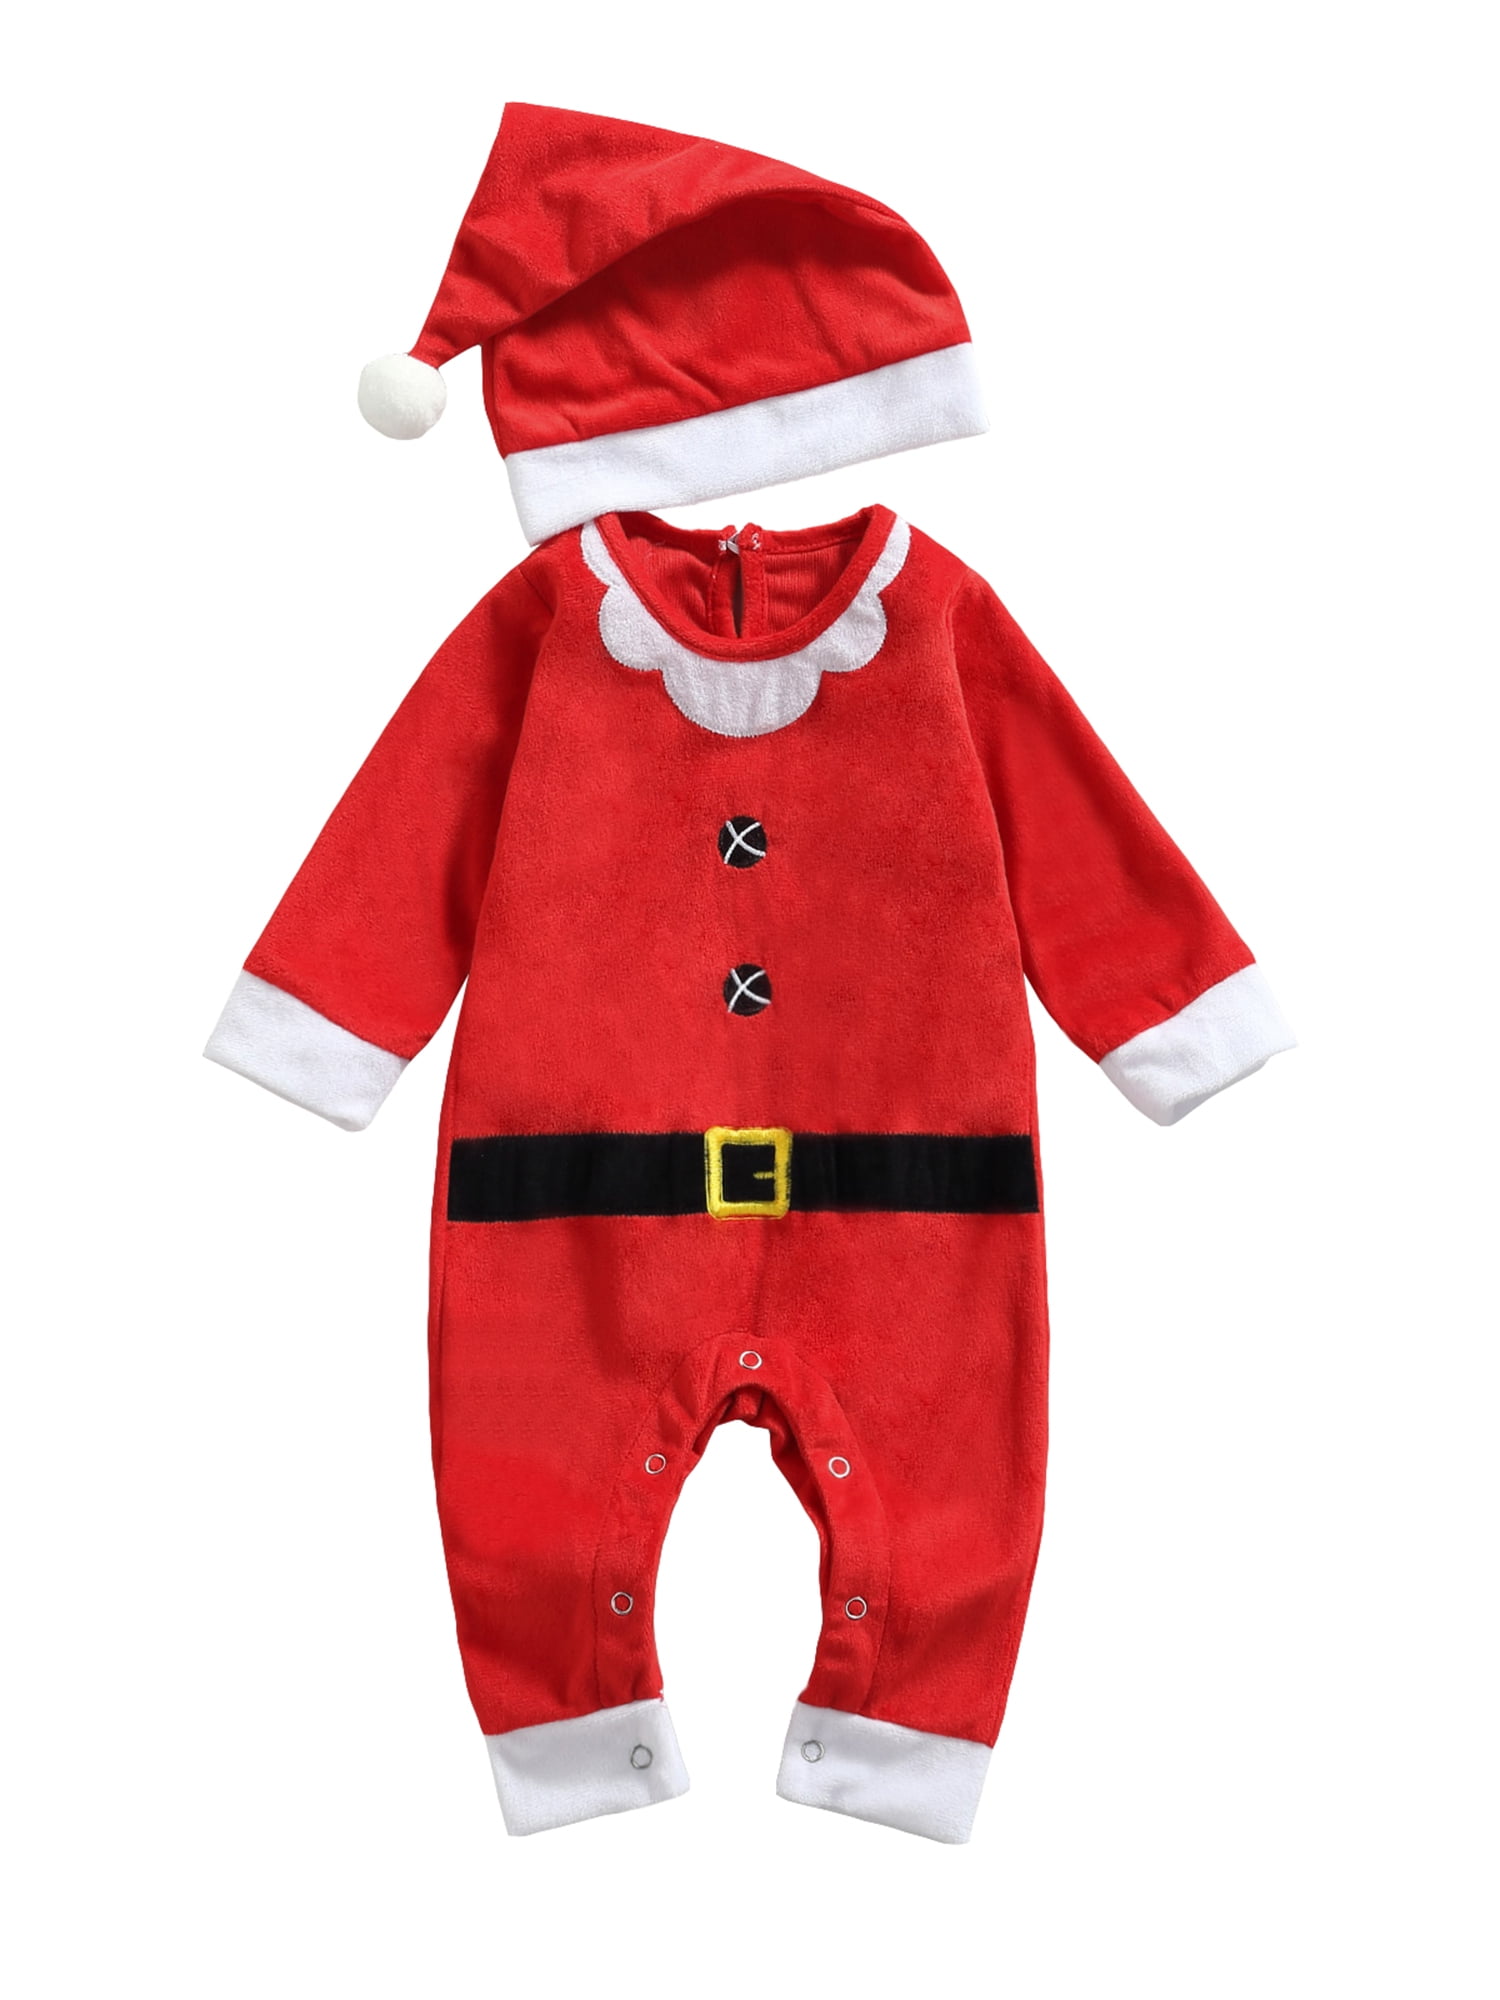 2Pcs Newborn Baby Girl Boy Christmas Costume Santa Claus Hat+Romper Warm Clothes 